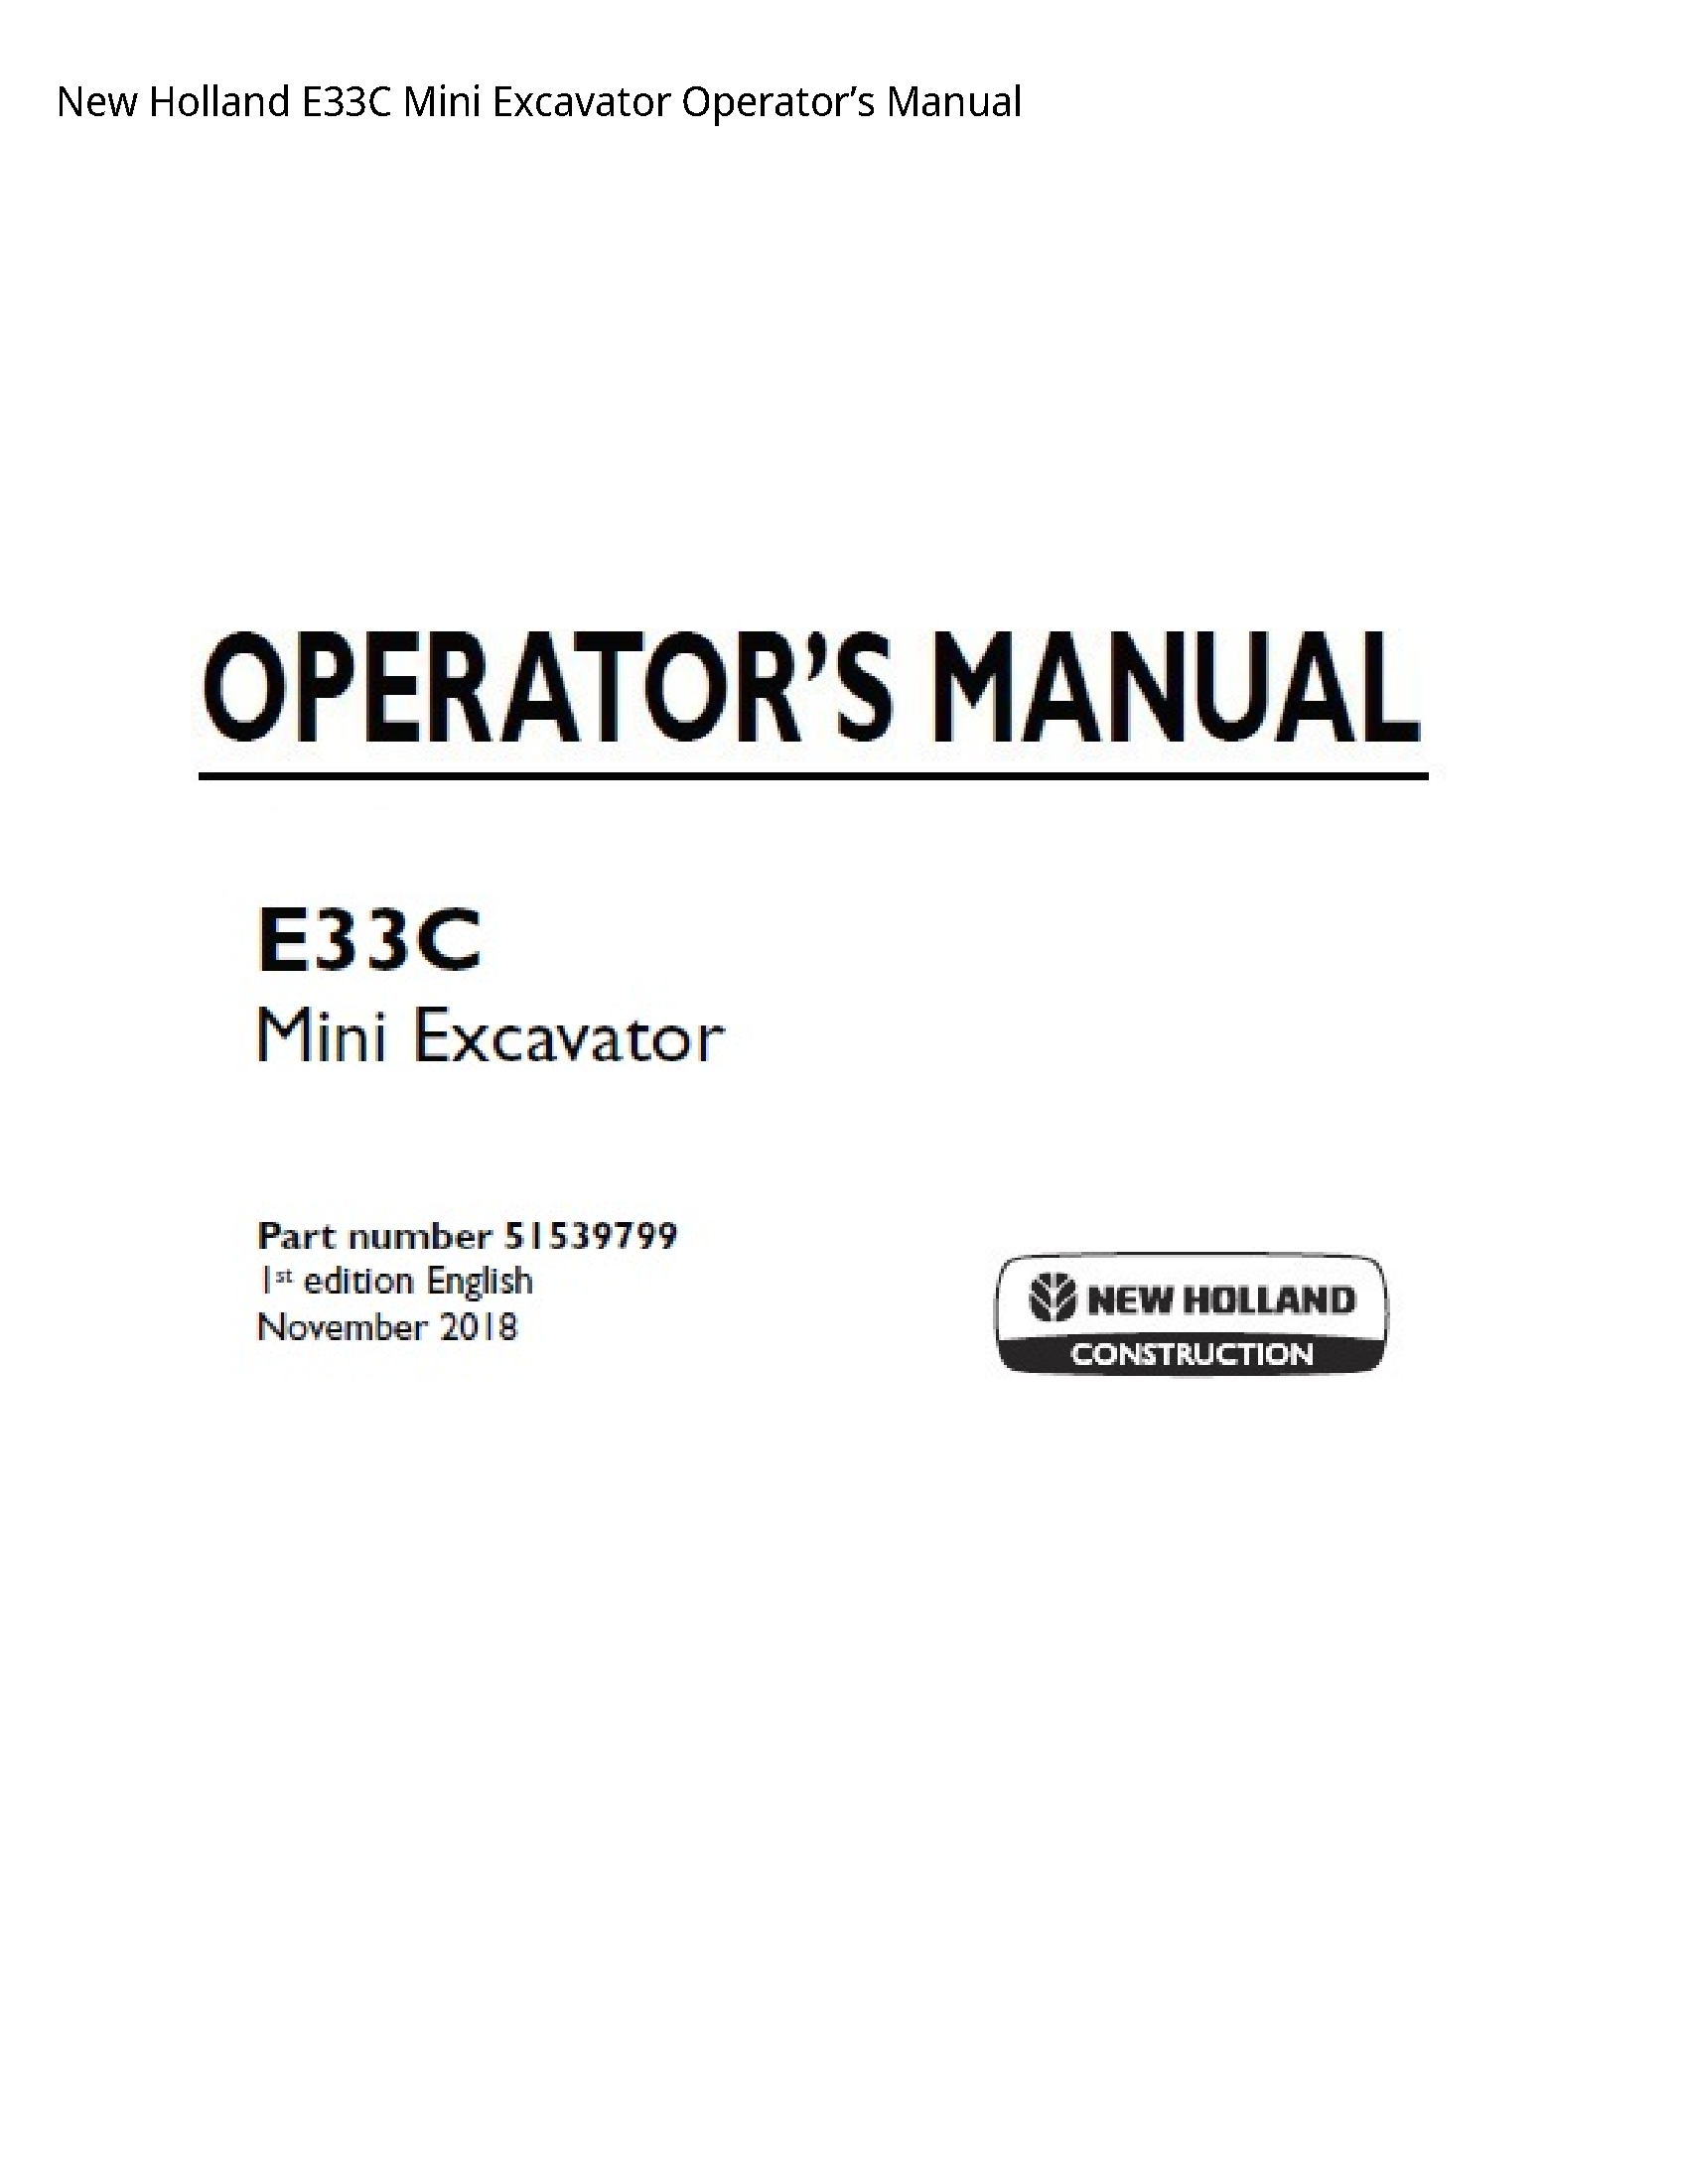 New Holland E33C Mini Excavator Operator’s manual